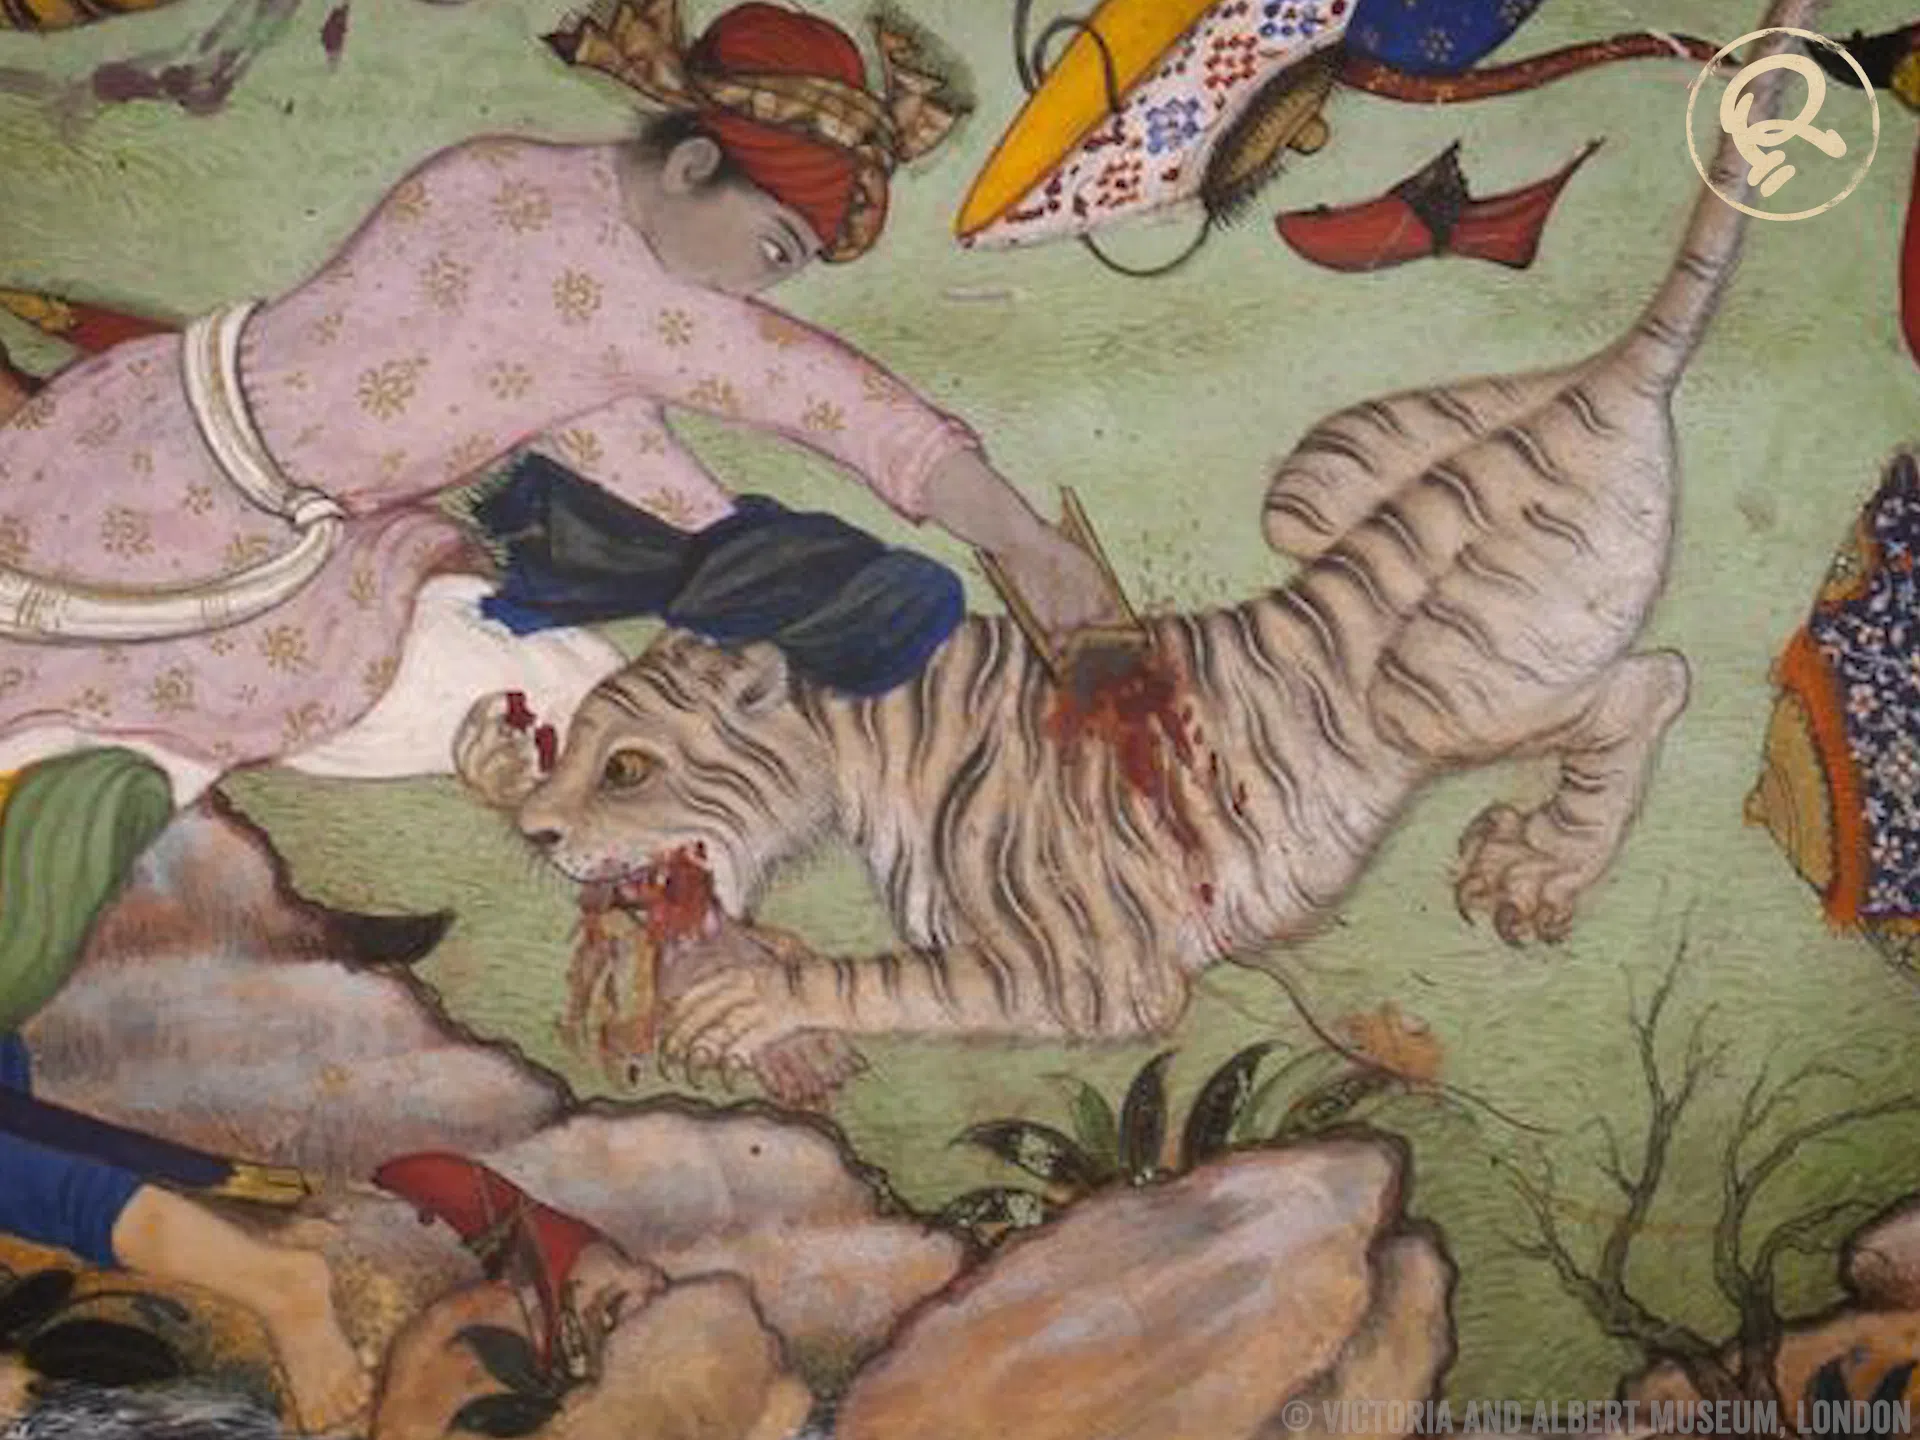 katar fights tiger